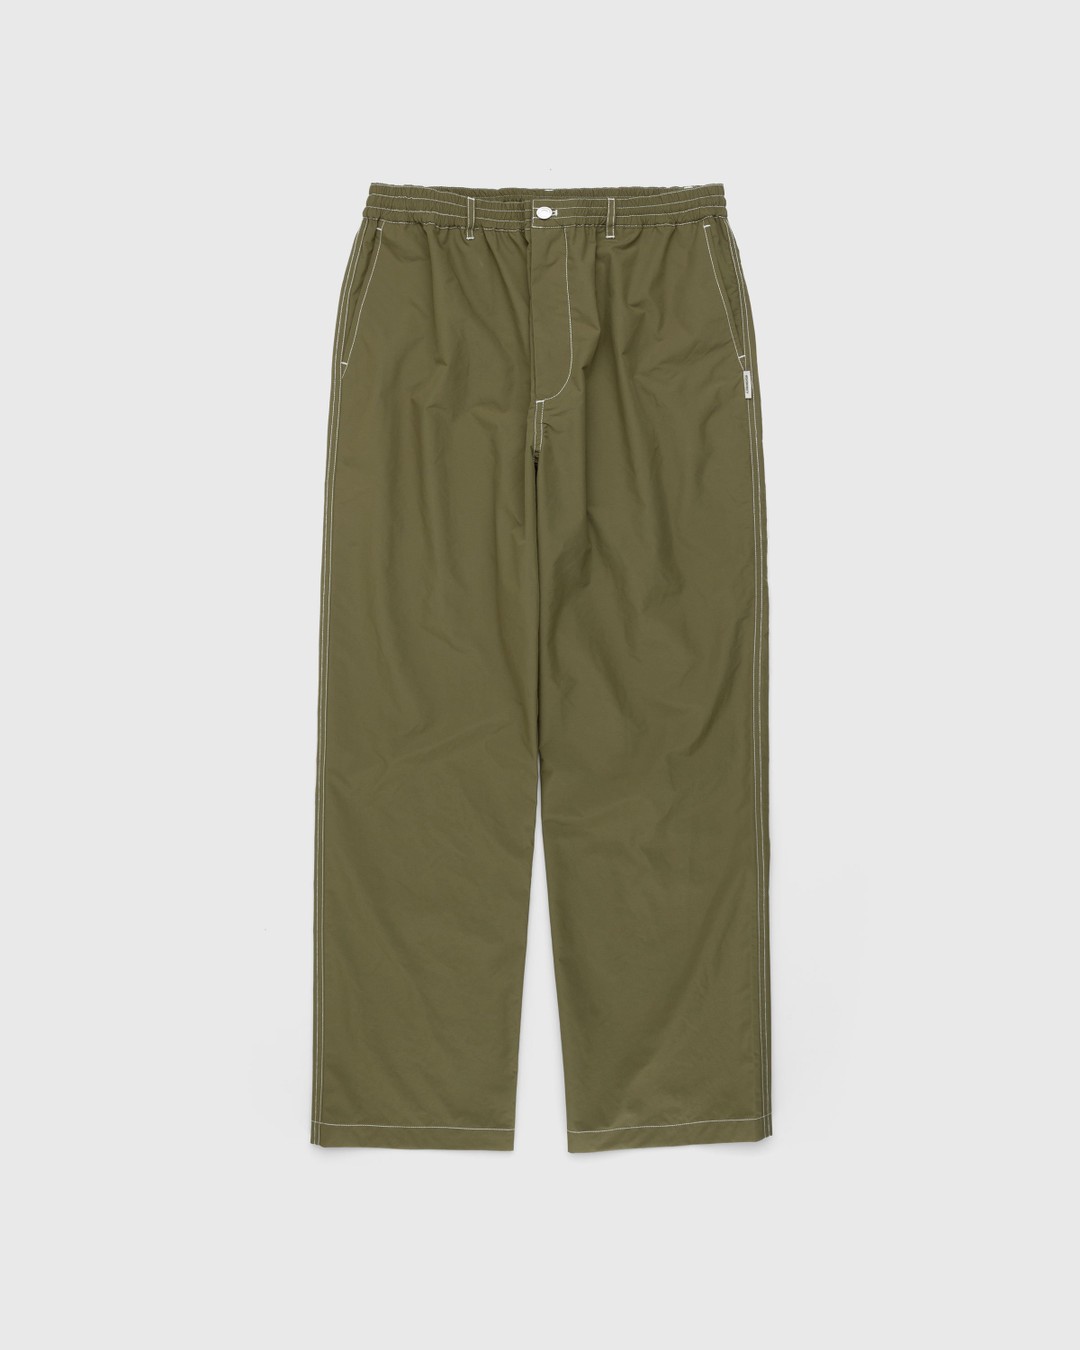 Highsnobiety – Contrast Stitch Pants Khaki - Pants - Green - Image 1